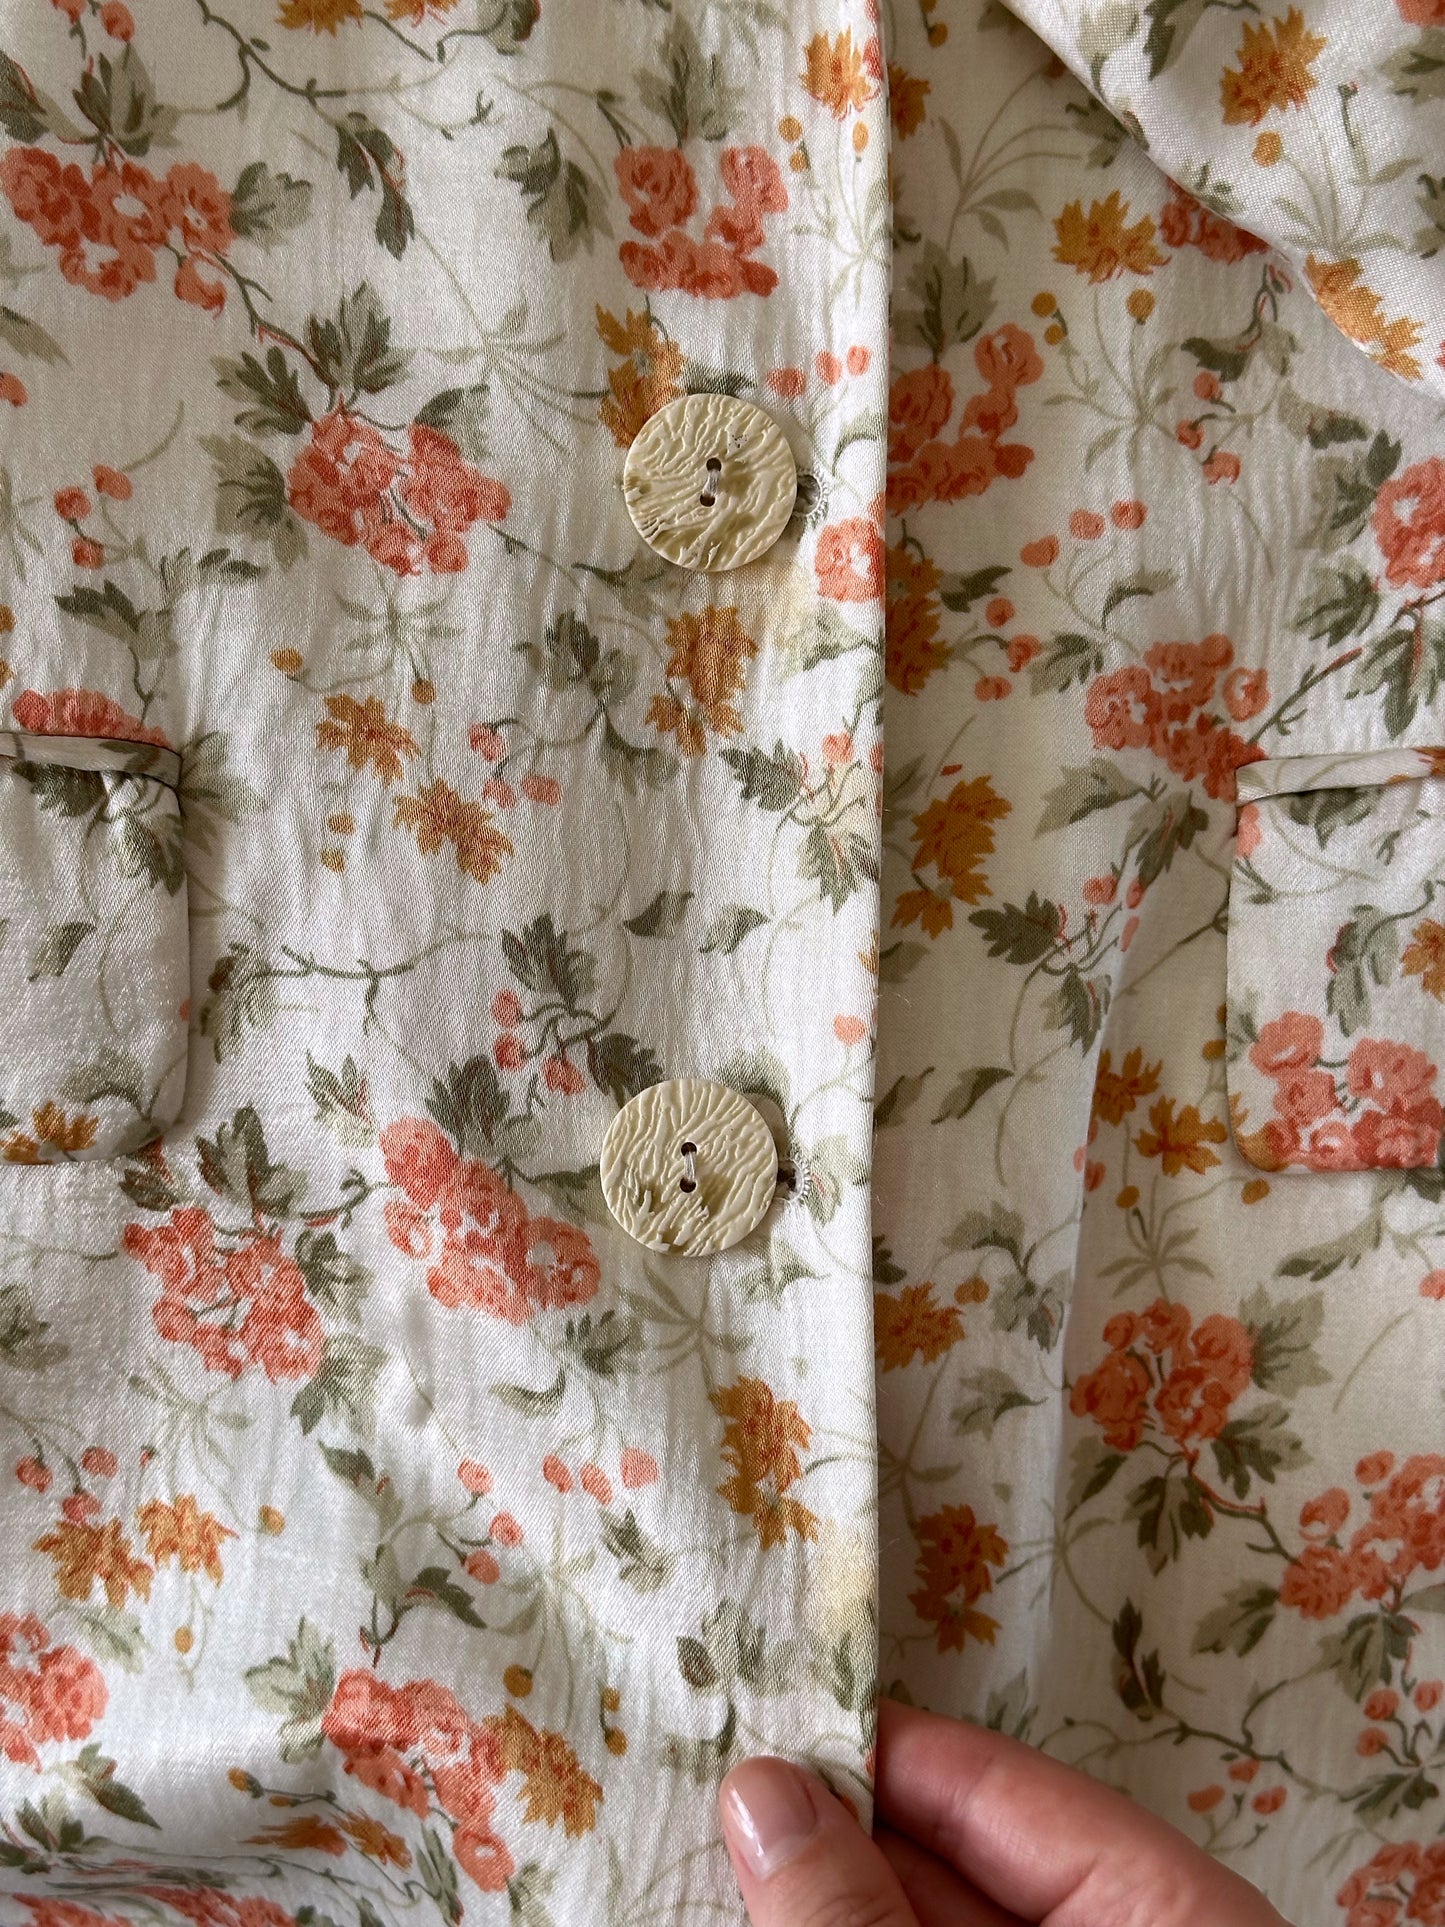 Beautiful vintage satin blazer with floral print